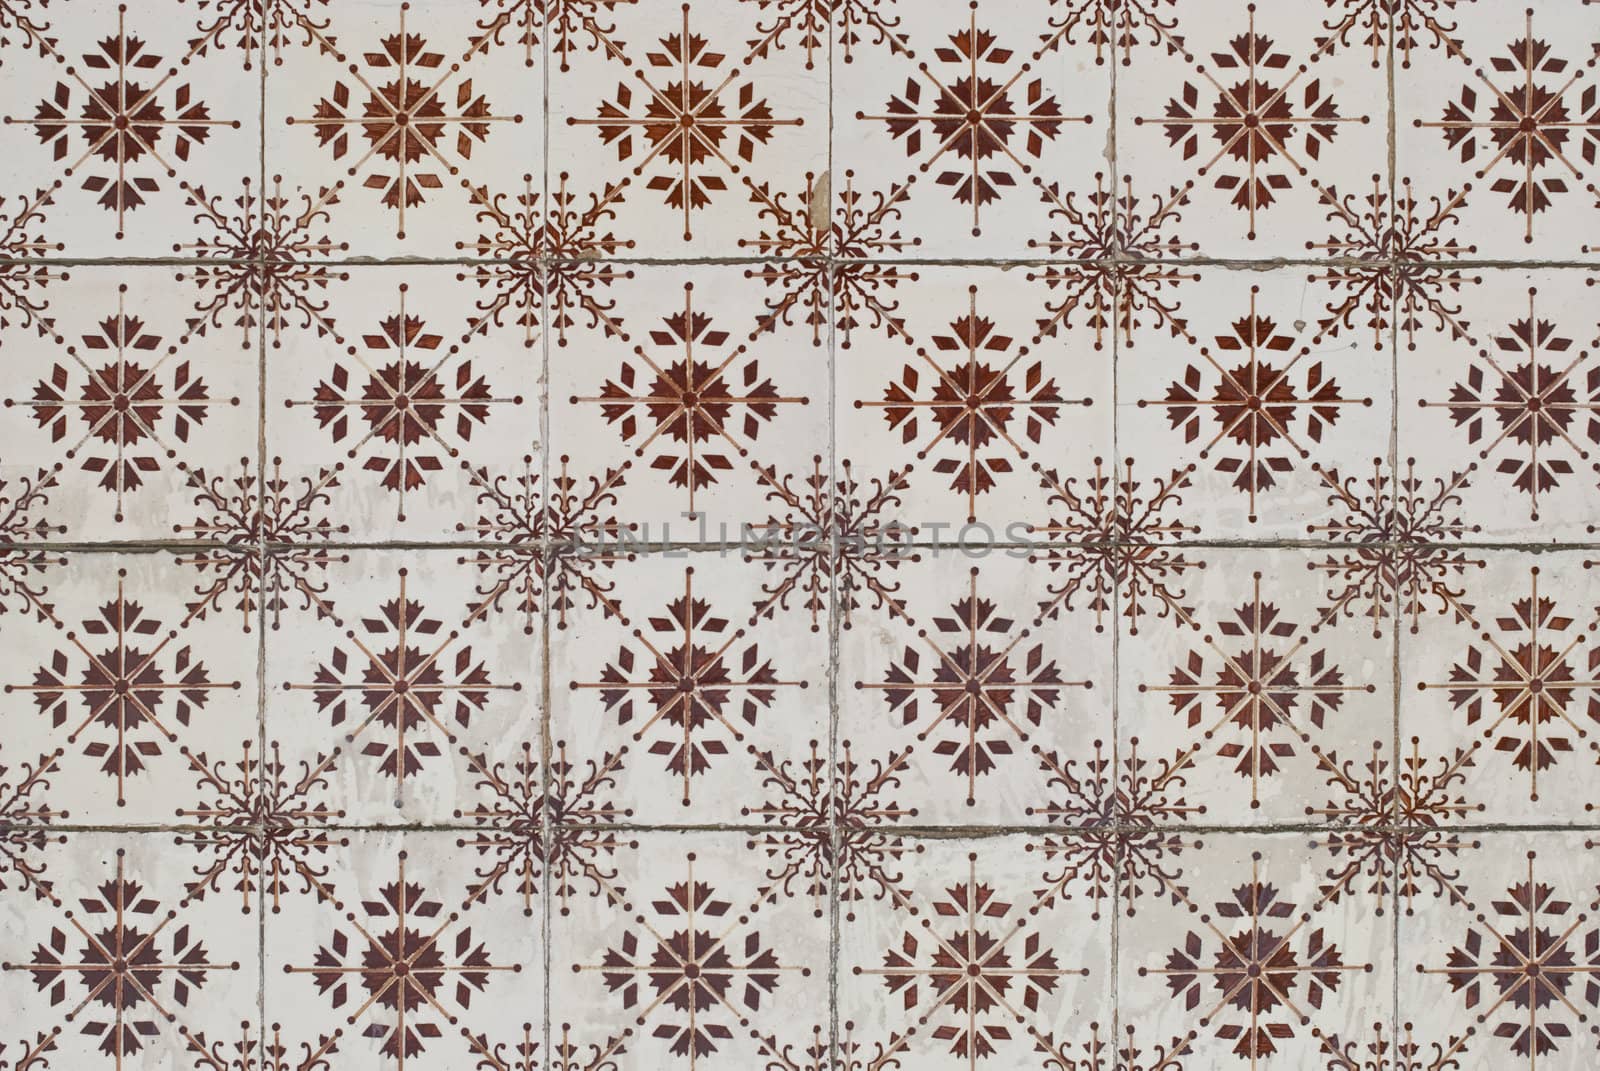 Portuguese glazed tiles 081 by homydesign